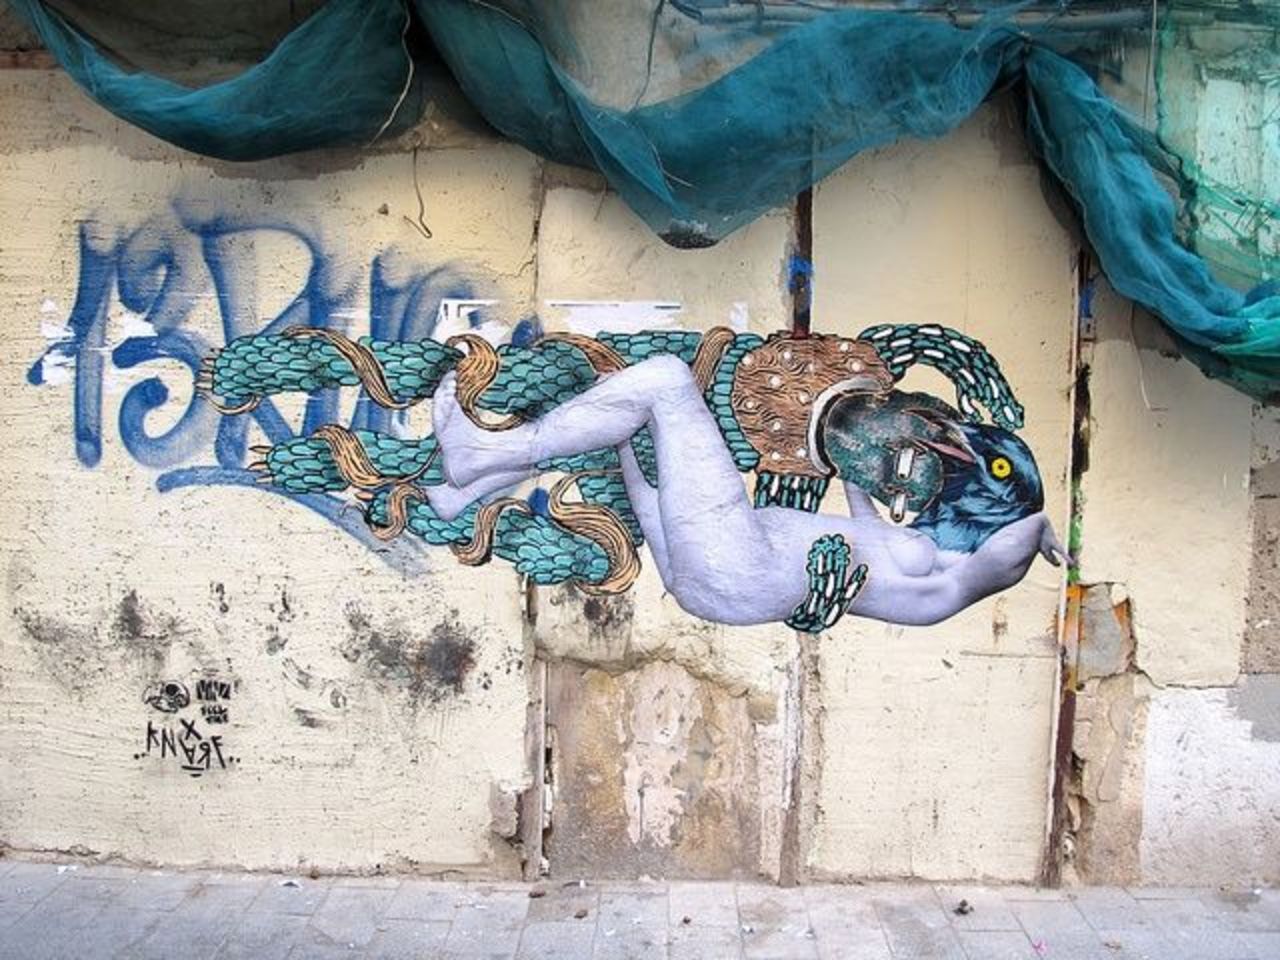 Interracial love  Vinz & Knarf in Valencia, Spain#streetart #mural #graffiti #art https://t.co/ovh8rWO0fk